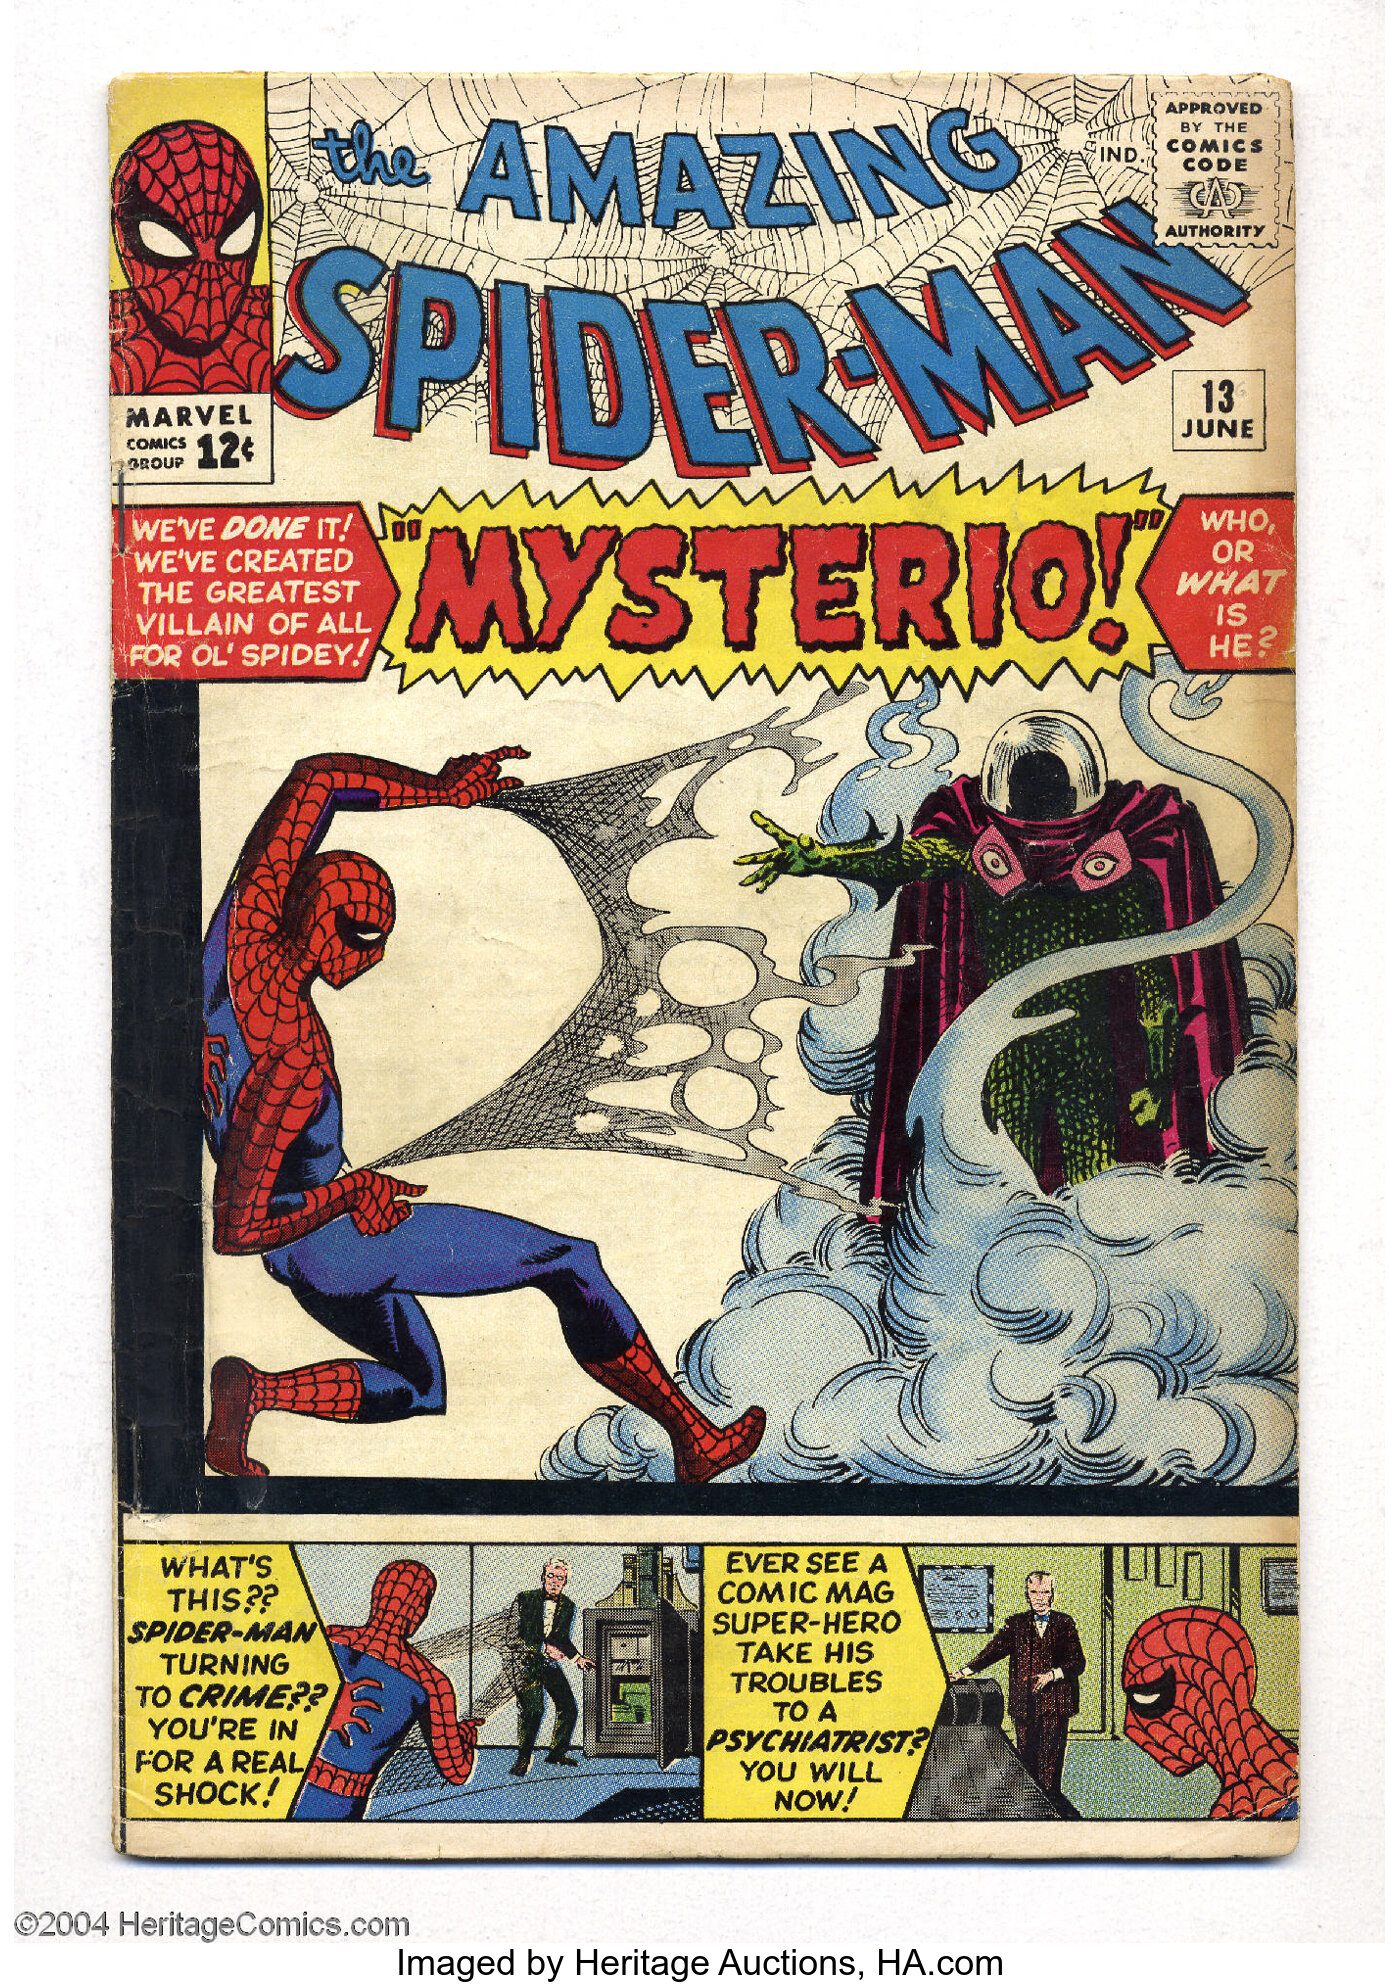 the amazing spider man mysterio